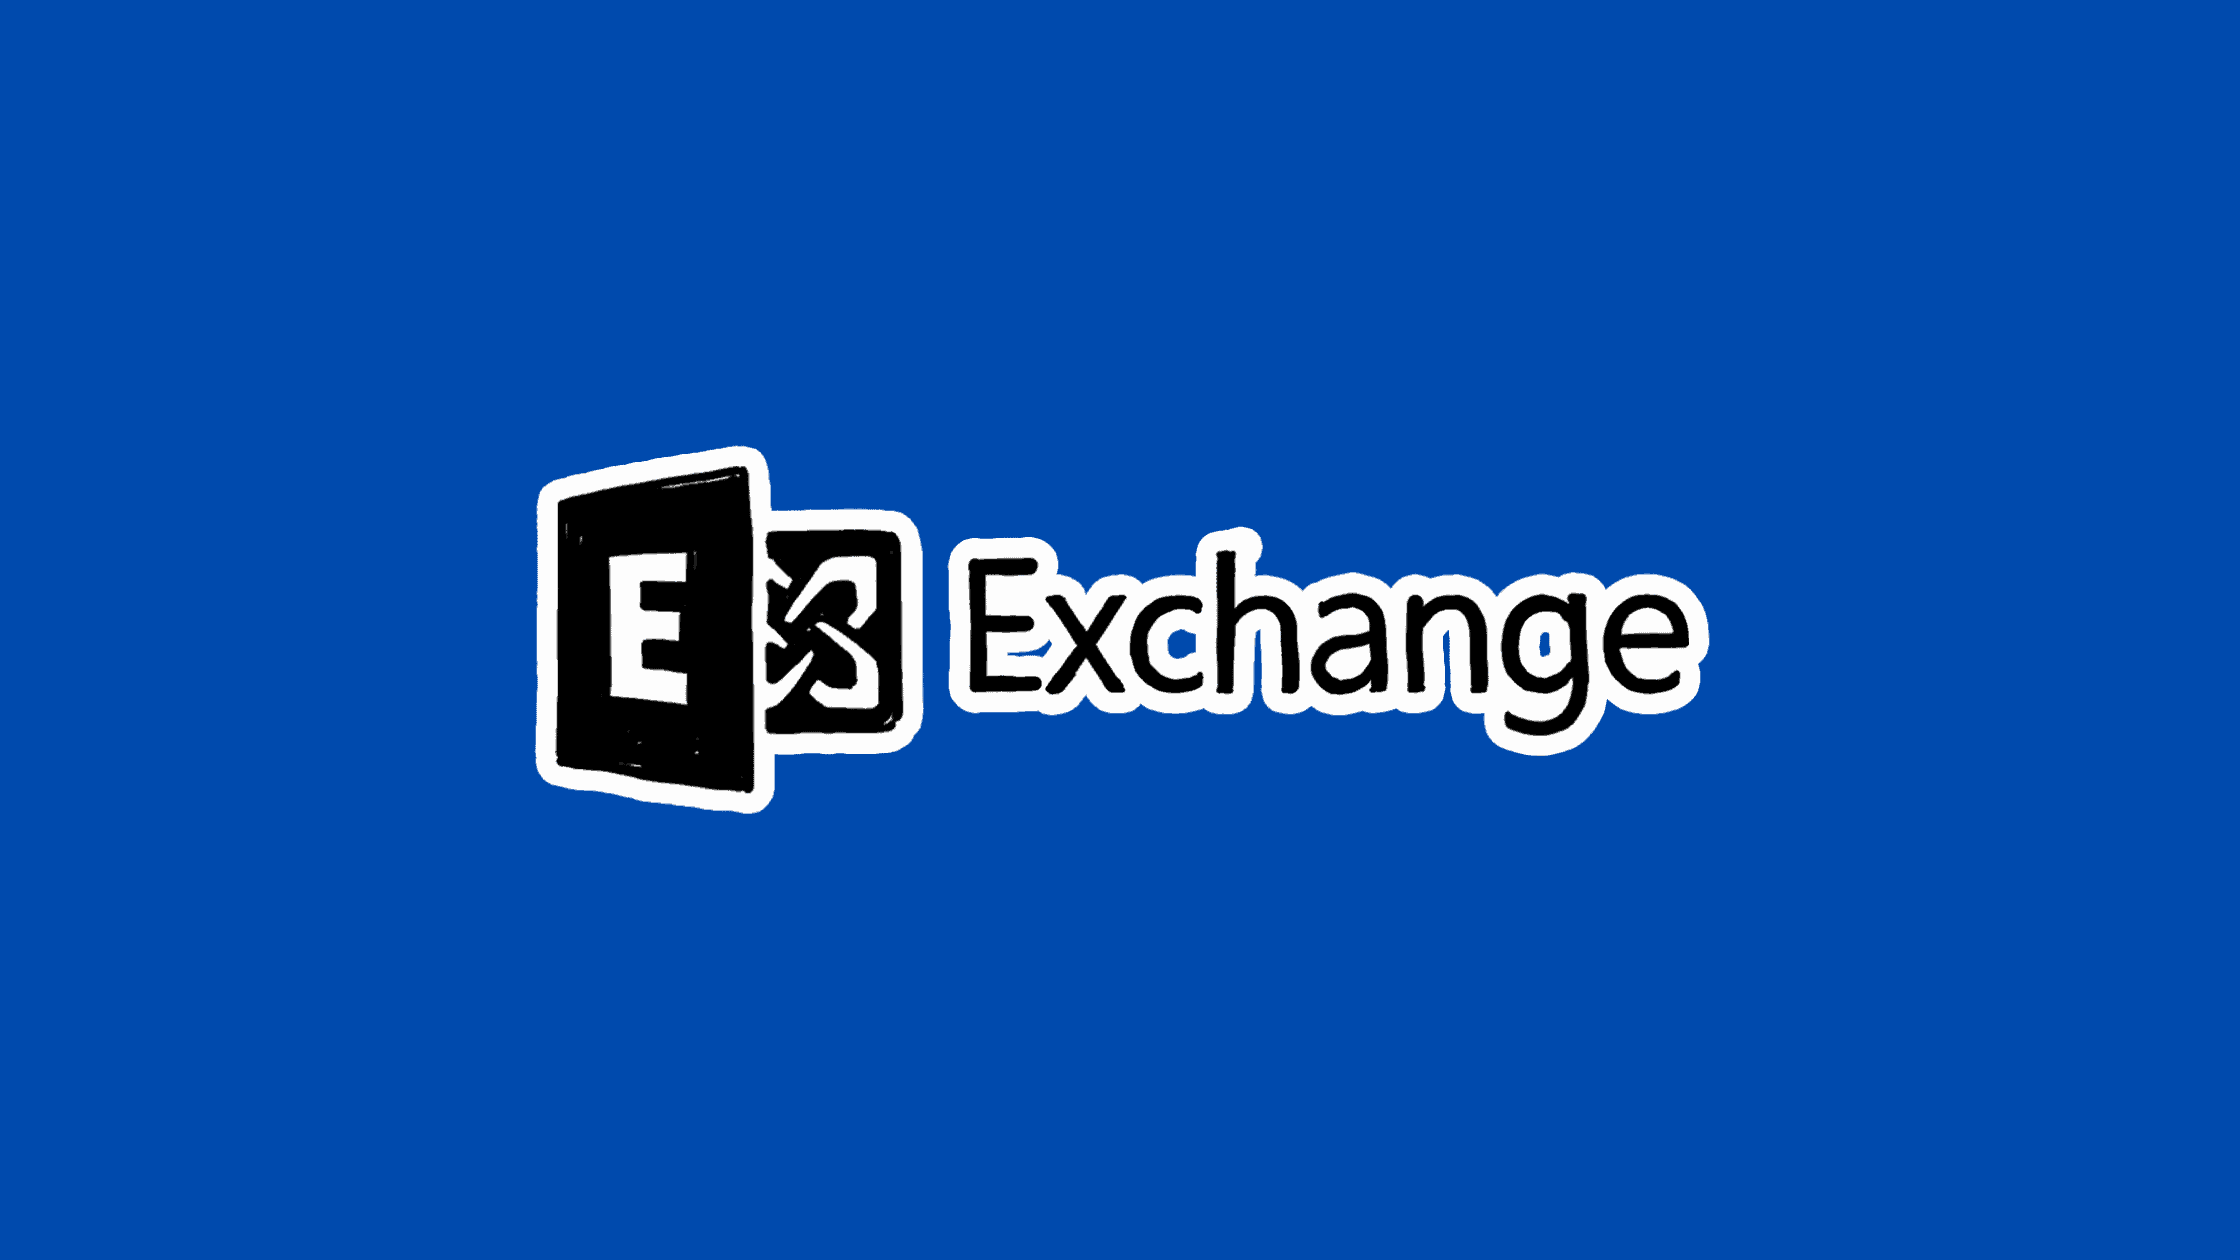 New Workaround To Mitigate The Proxynotshell Two 0 Day Vulnerabilities In Microsoft Exchange Server